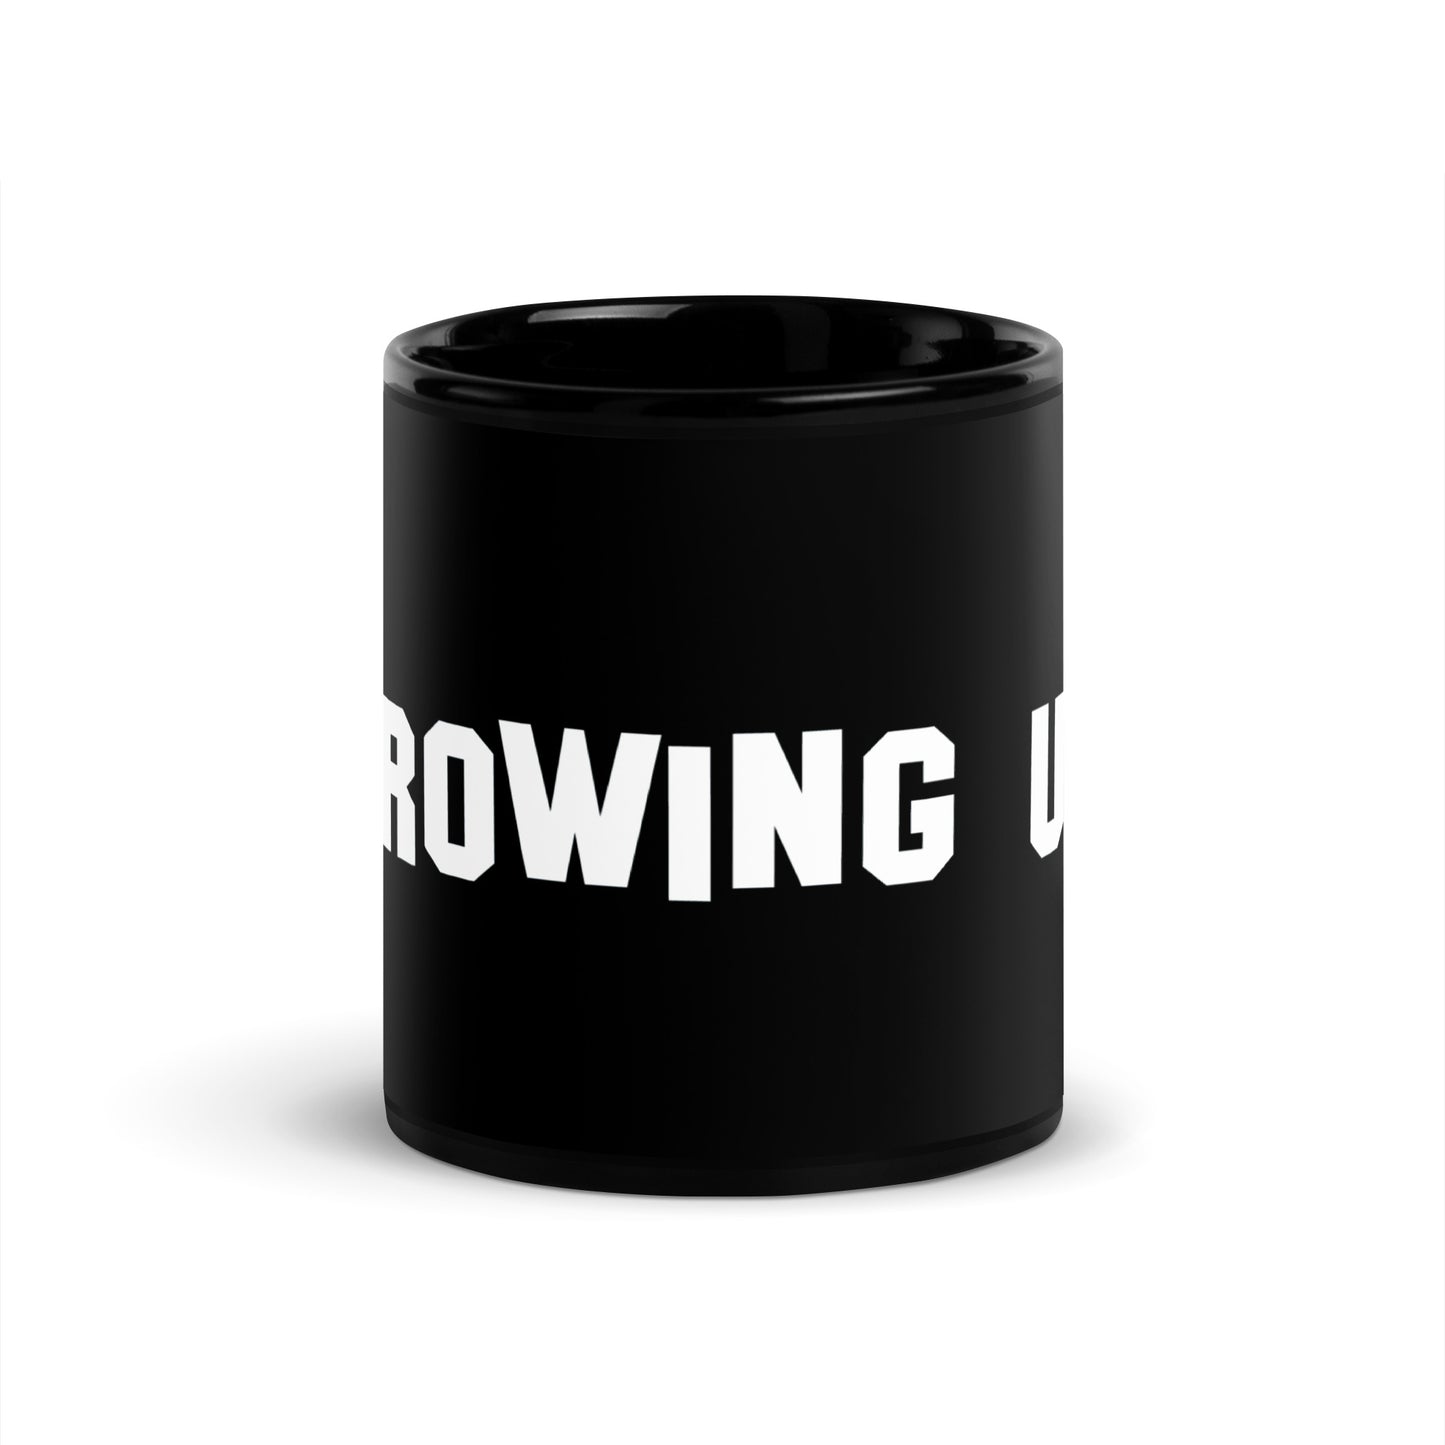 Growing Up - Black Glossy Mug